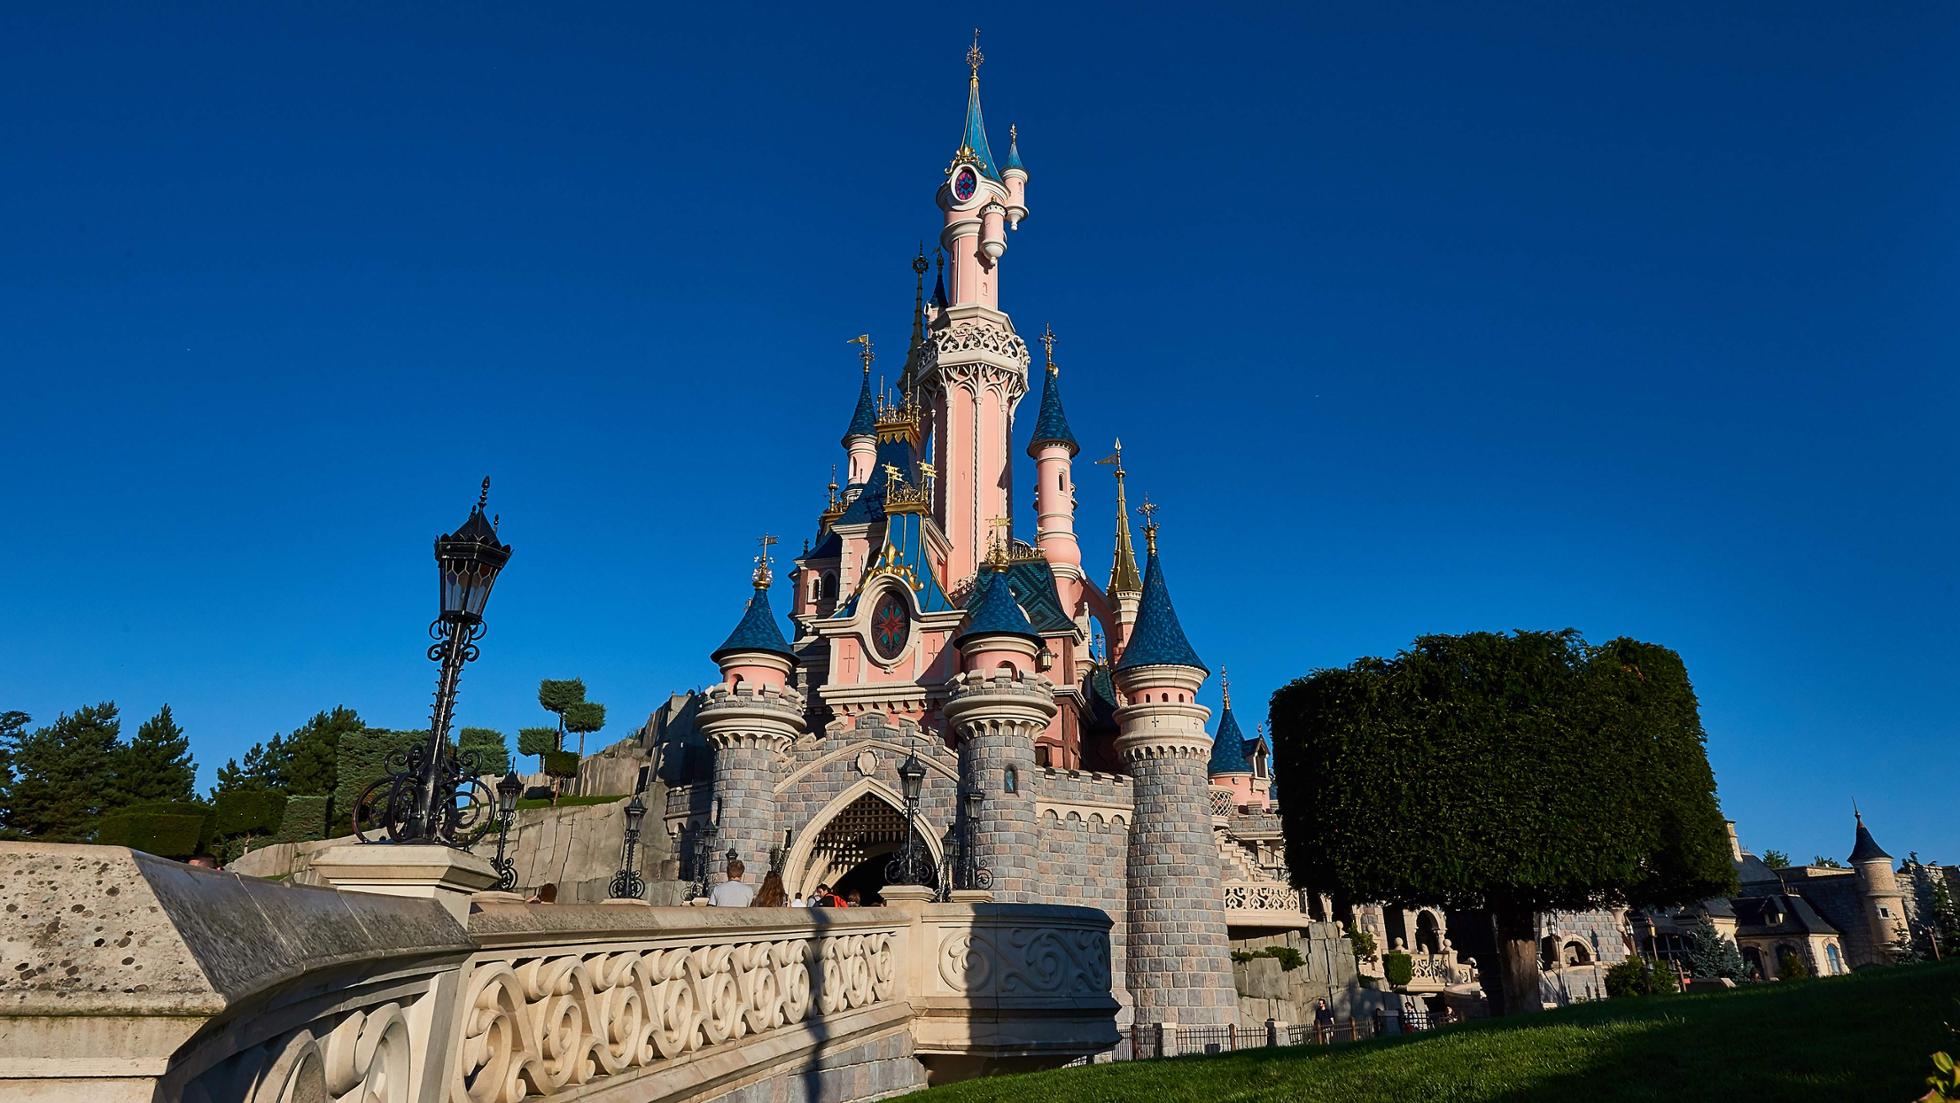 Dream Castle Hotel - Disneyland Paris tips, advice & planning